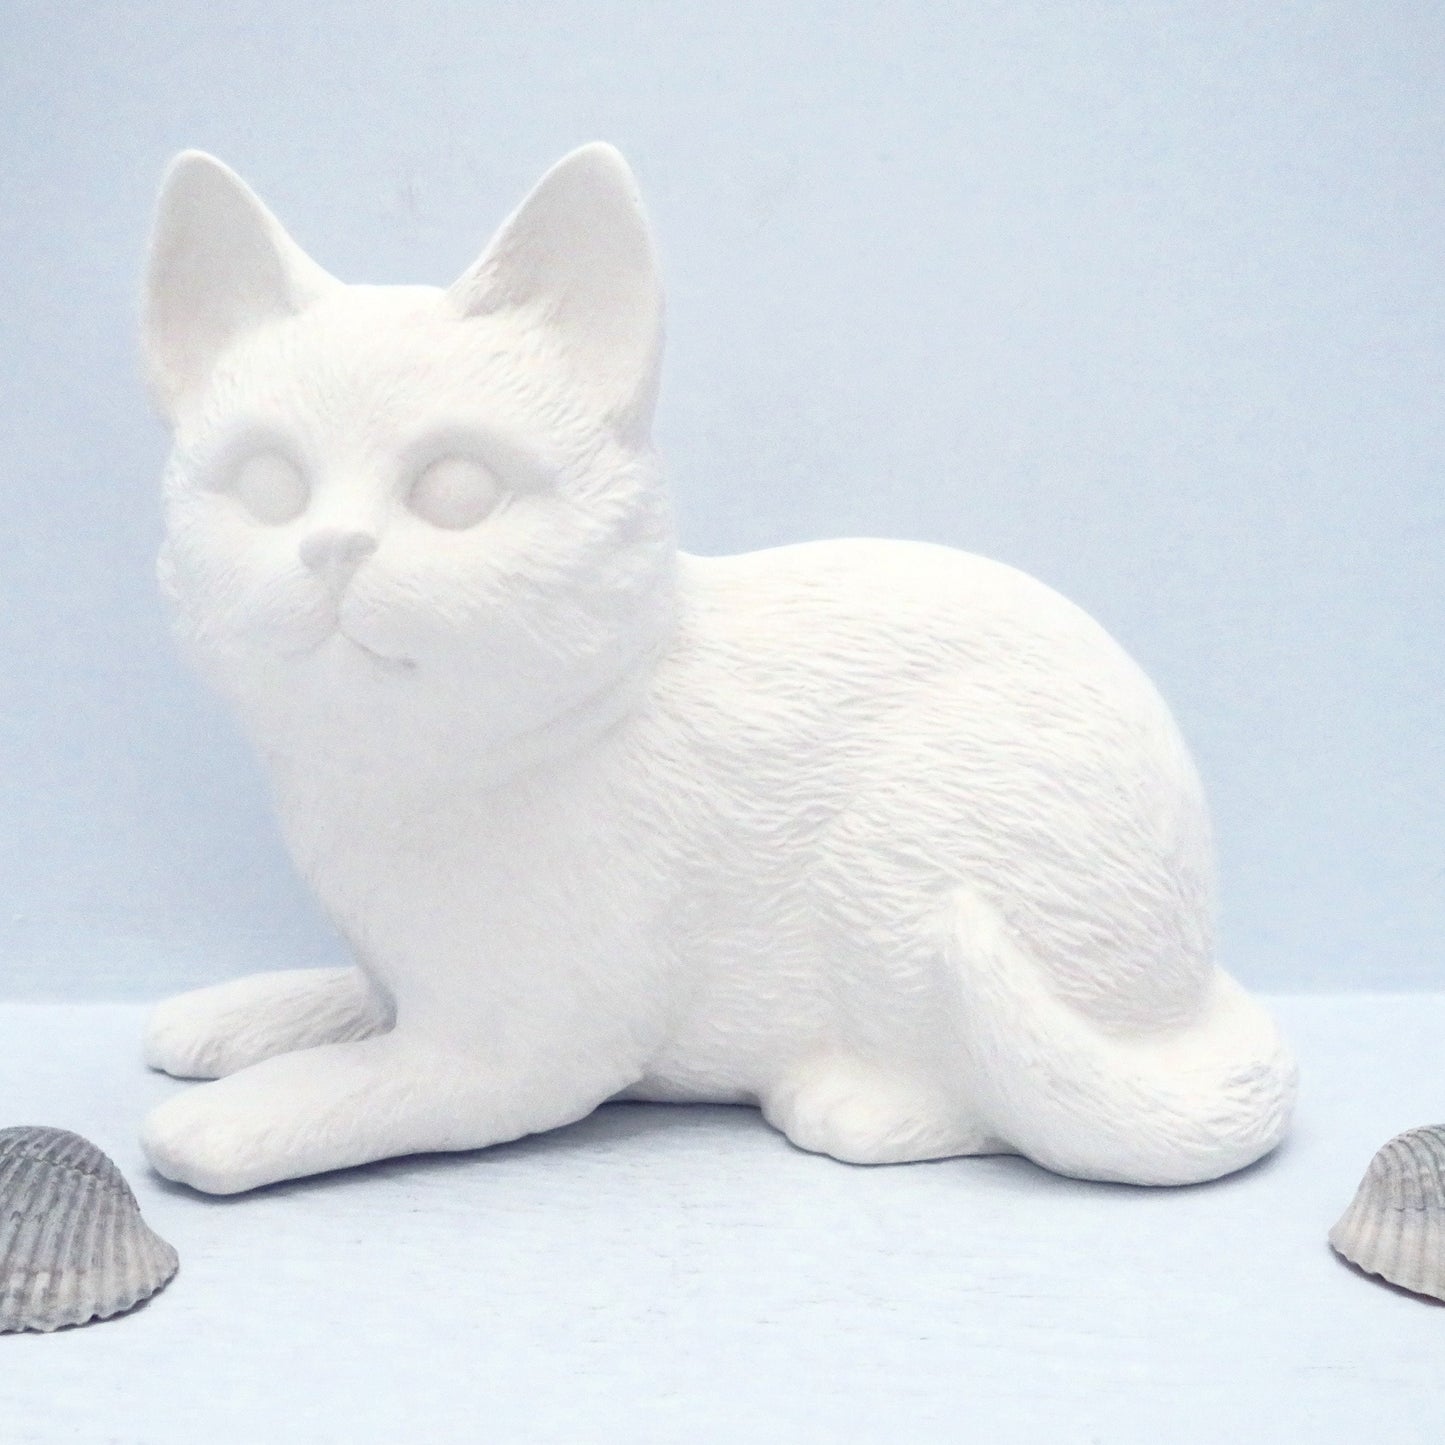 Ready to Paint Ceramic Bisque Cat Figurine / Ceramics to Paint / Paintable Cat Statue / Cat Decor / Cat Gift / Cat Mom / Unpainted Bisque